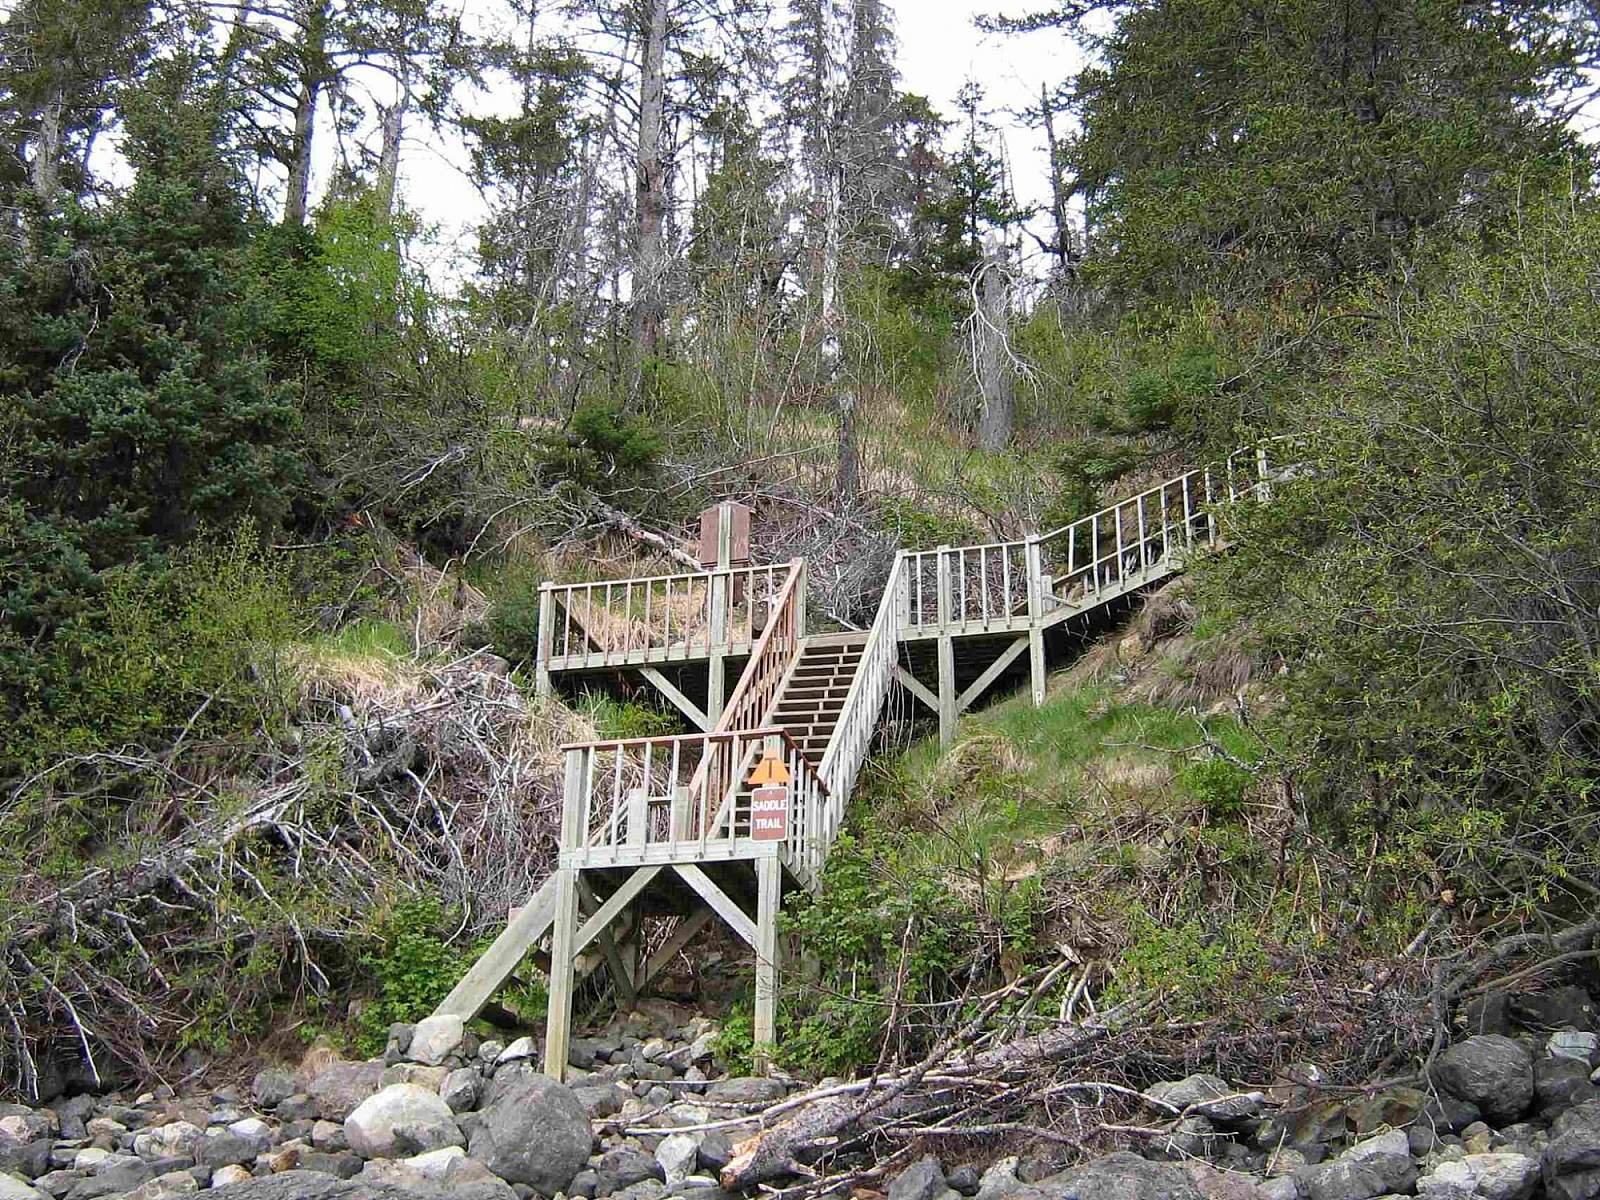 Saddle Trail Property - Trail Stairs Photo.jpg